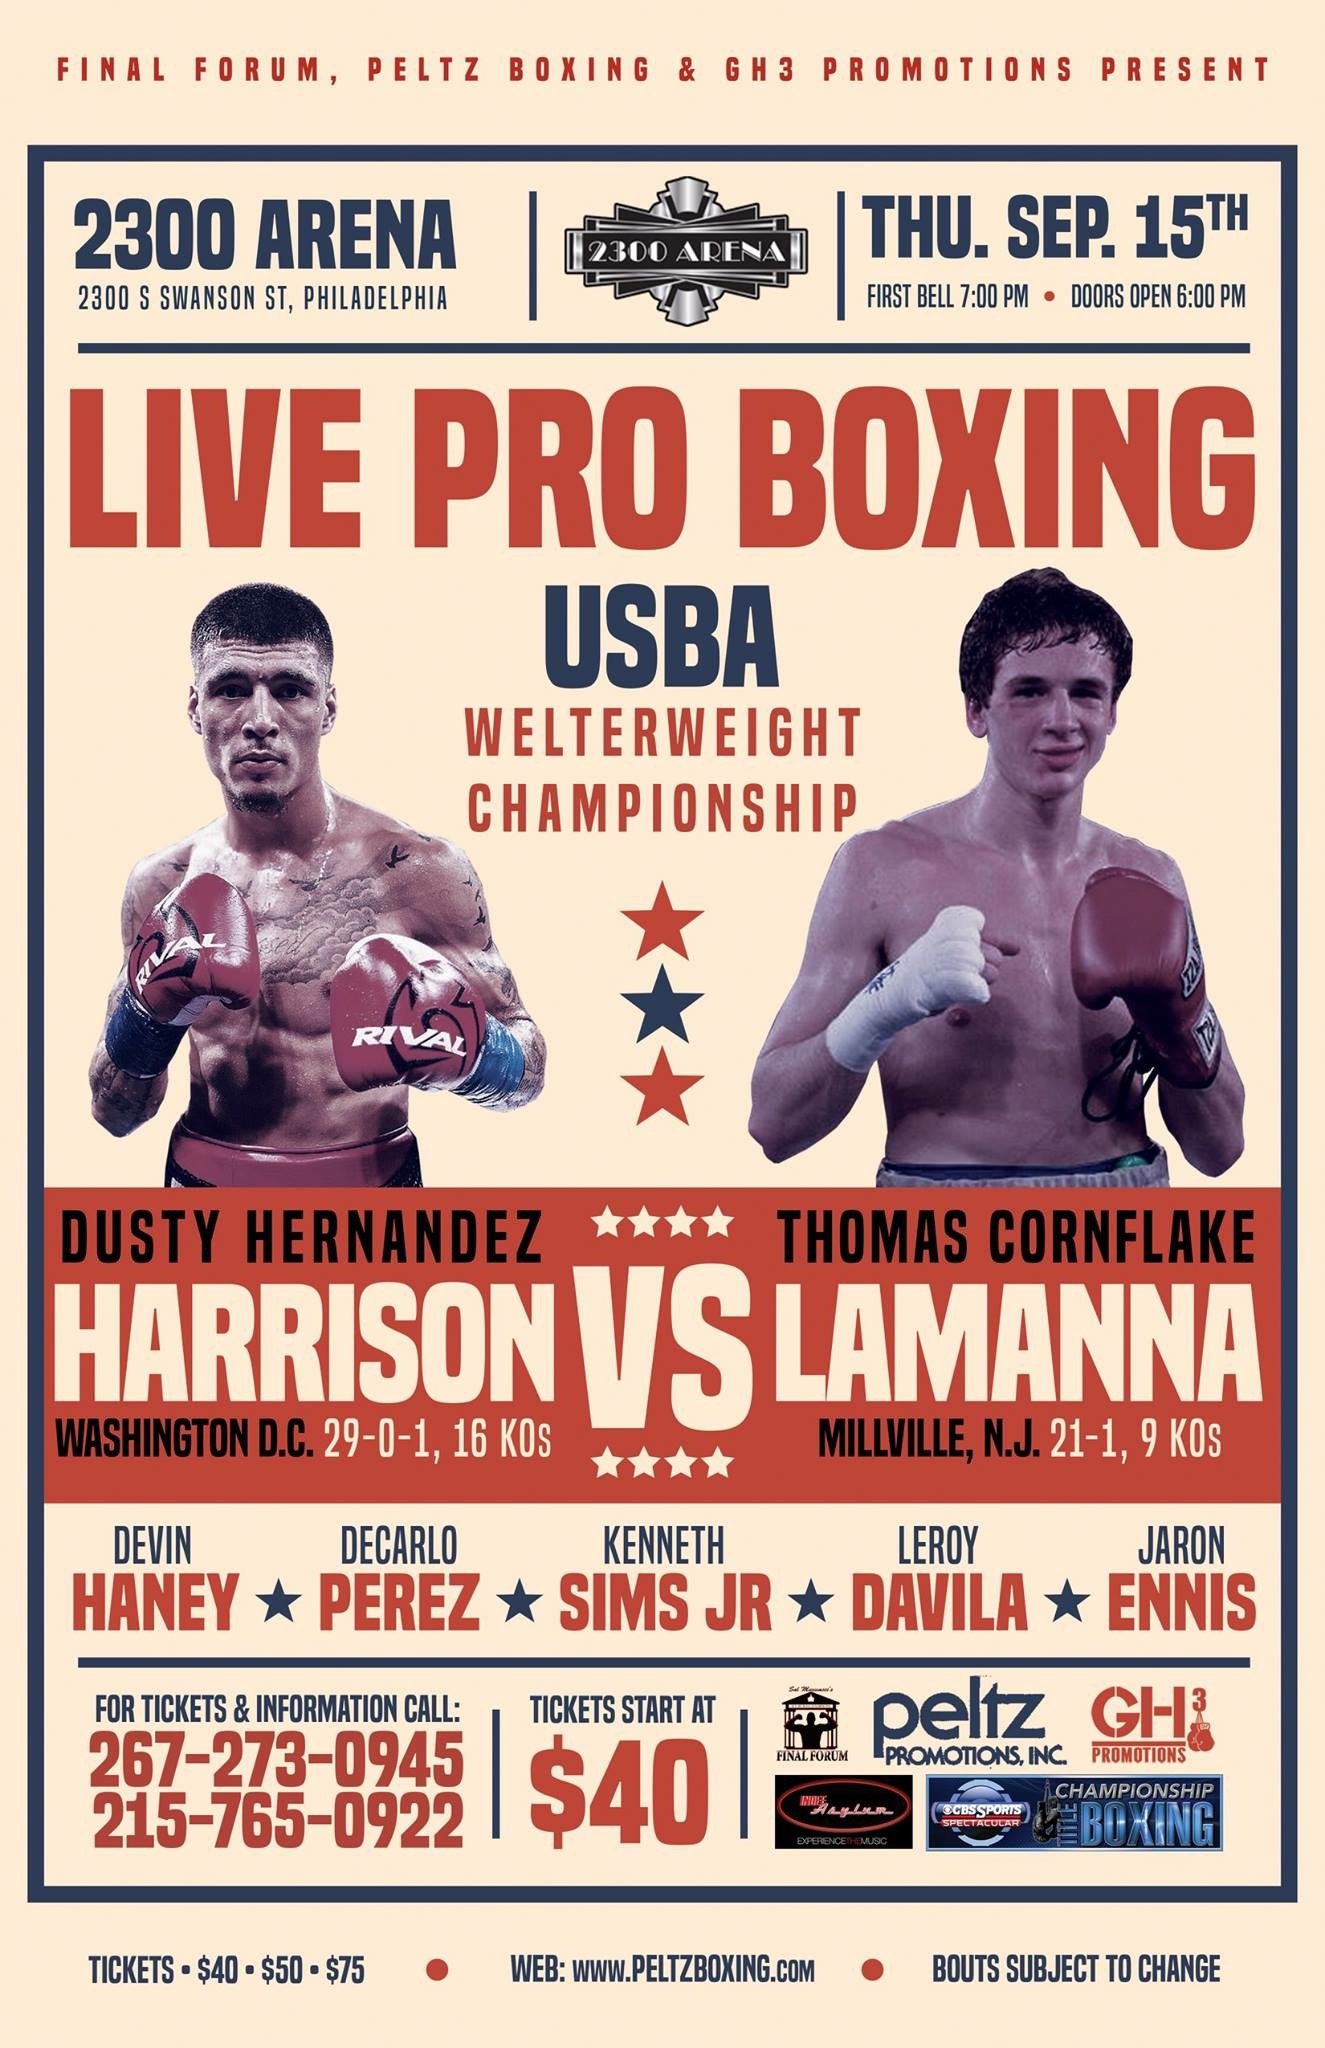 Thomas “Cornflake” Lamanna & Dusty Hernandez-Harrison Thursday in Philly Arena!